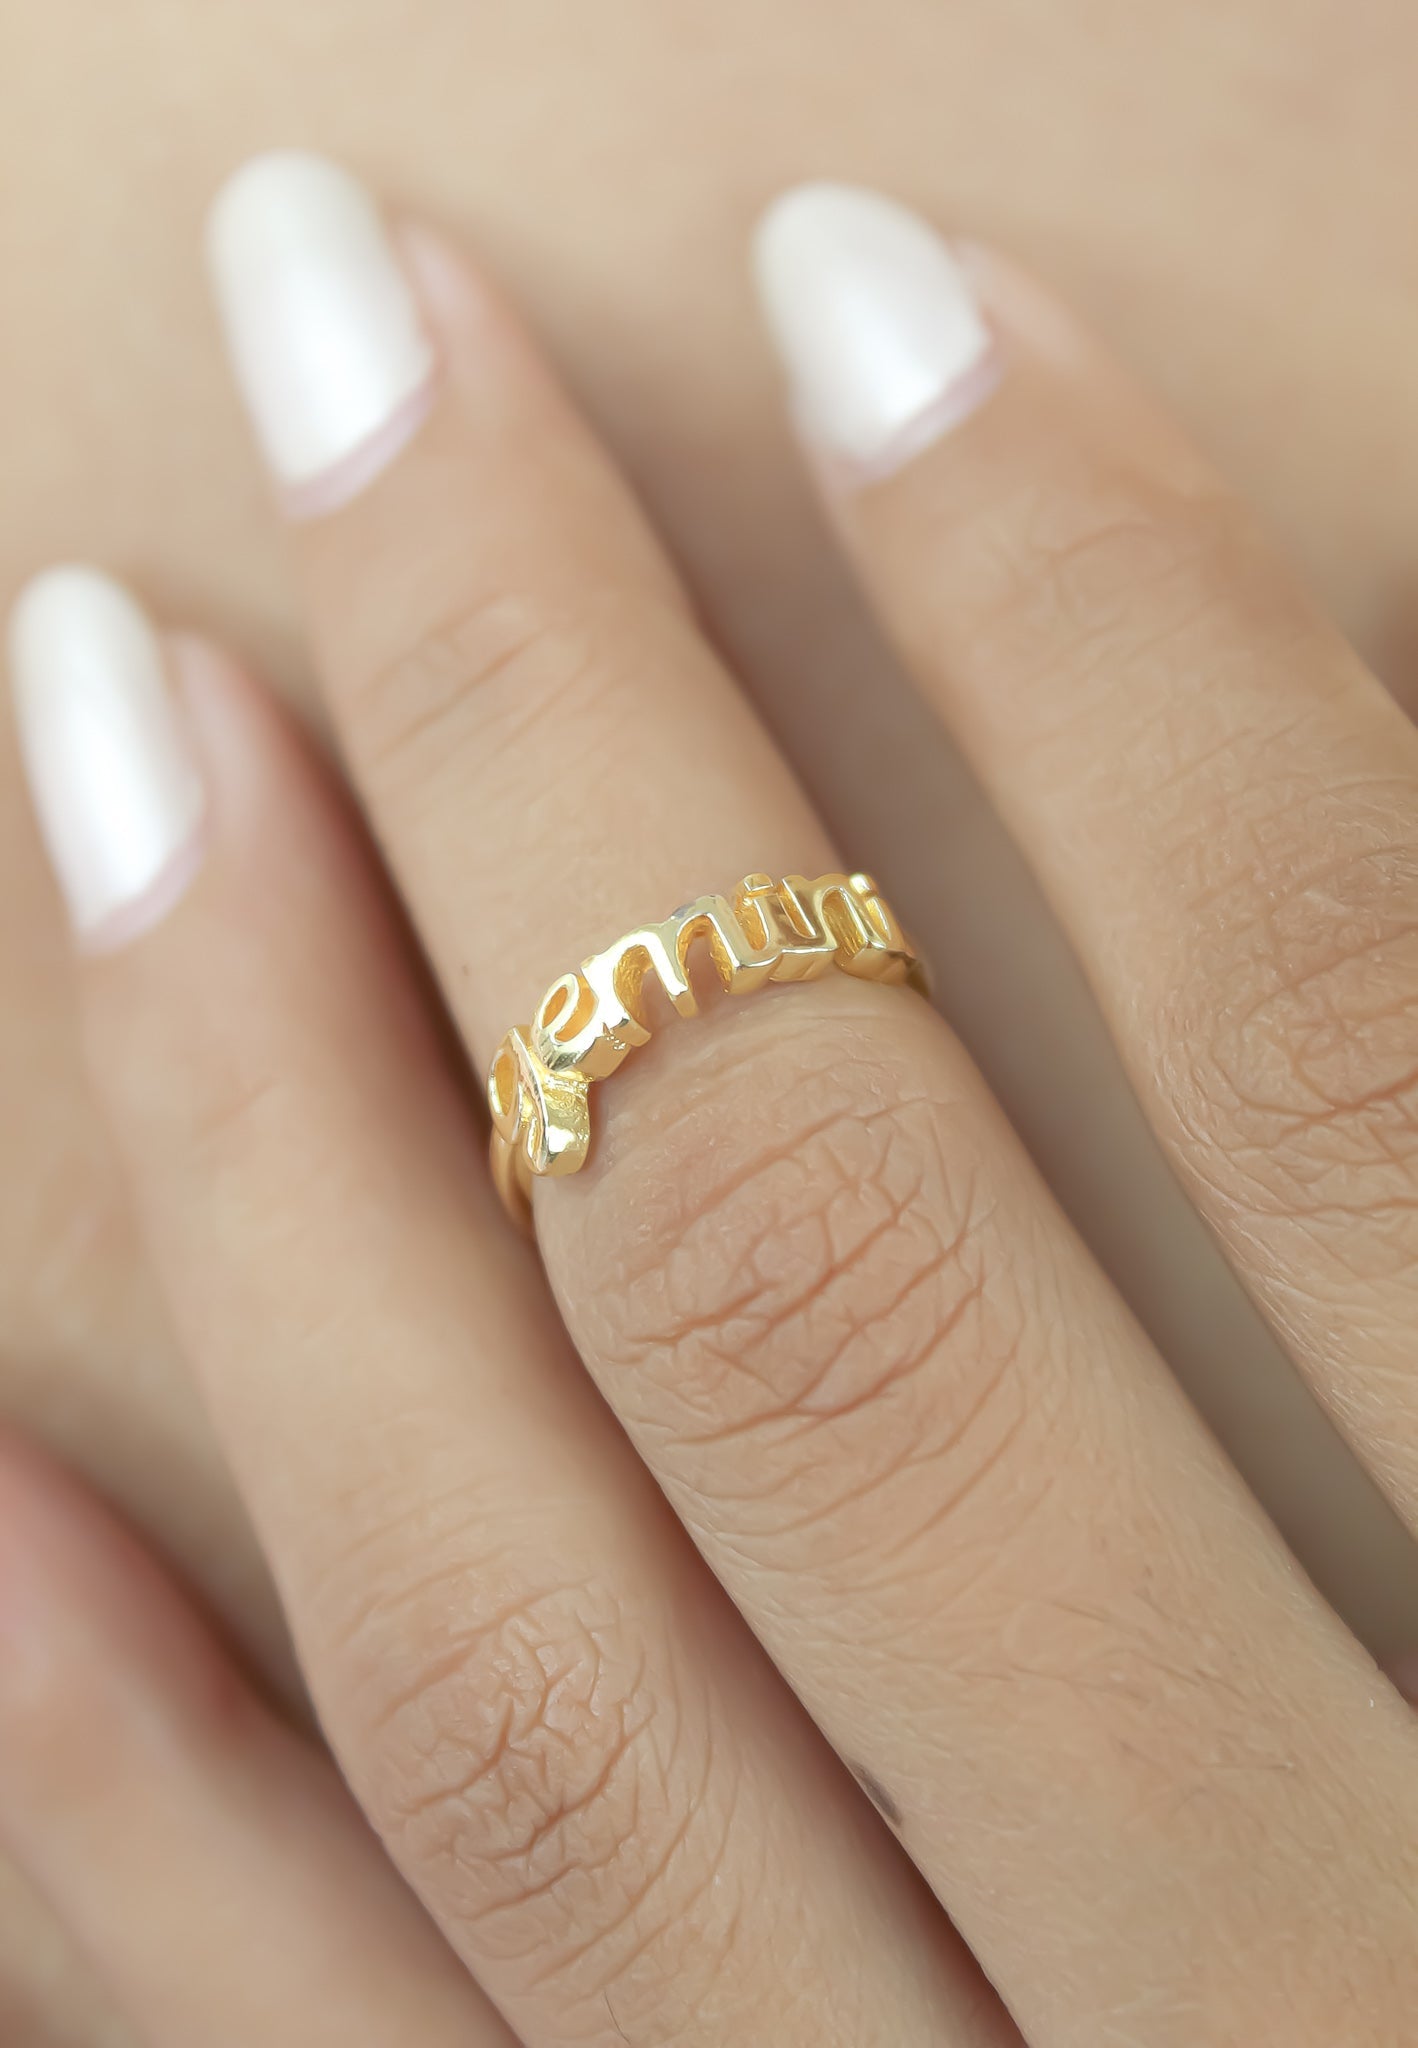 Gemini Zodiac Ring - Adjustable, Hypoallergenic, Sustainable Jewelry for Women Bijou Her